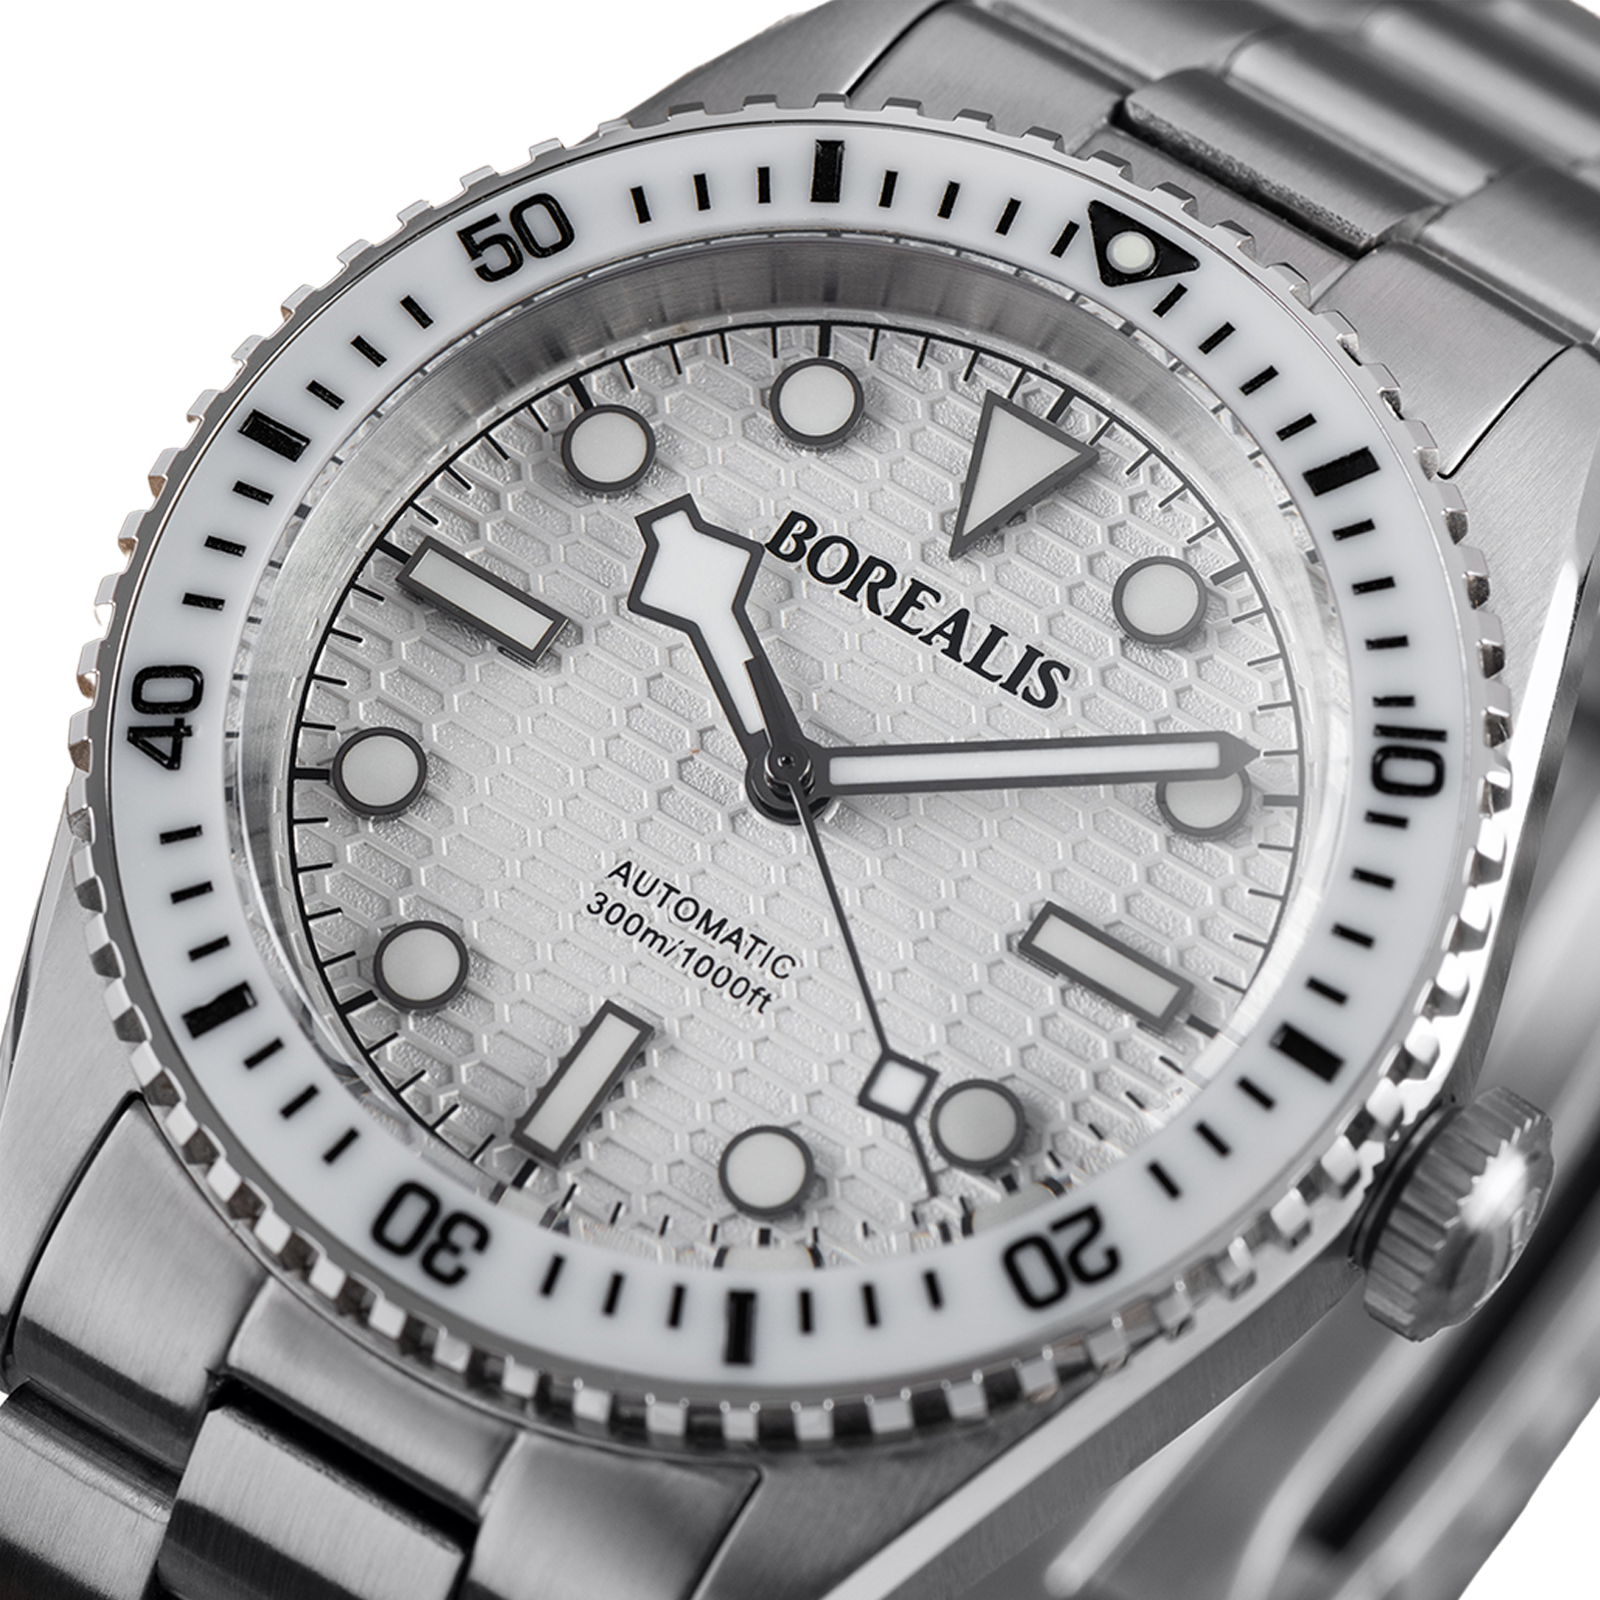 Purchase the top-quality Bull Shark V2 | Borealis Watch Company